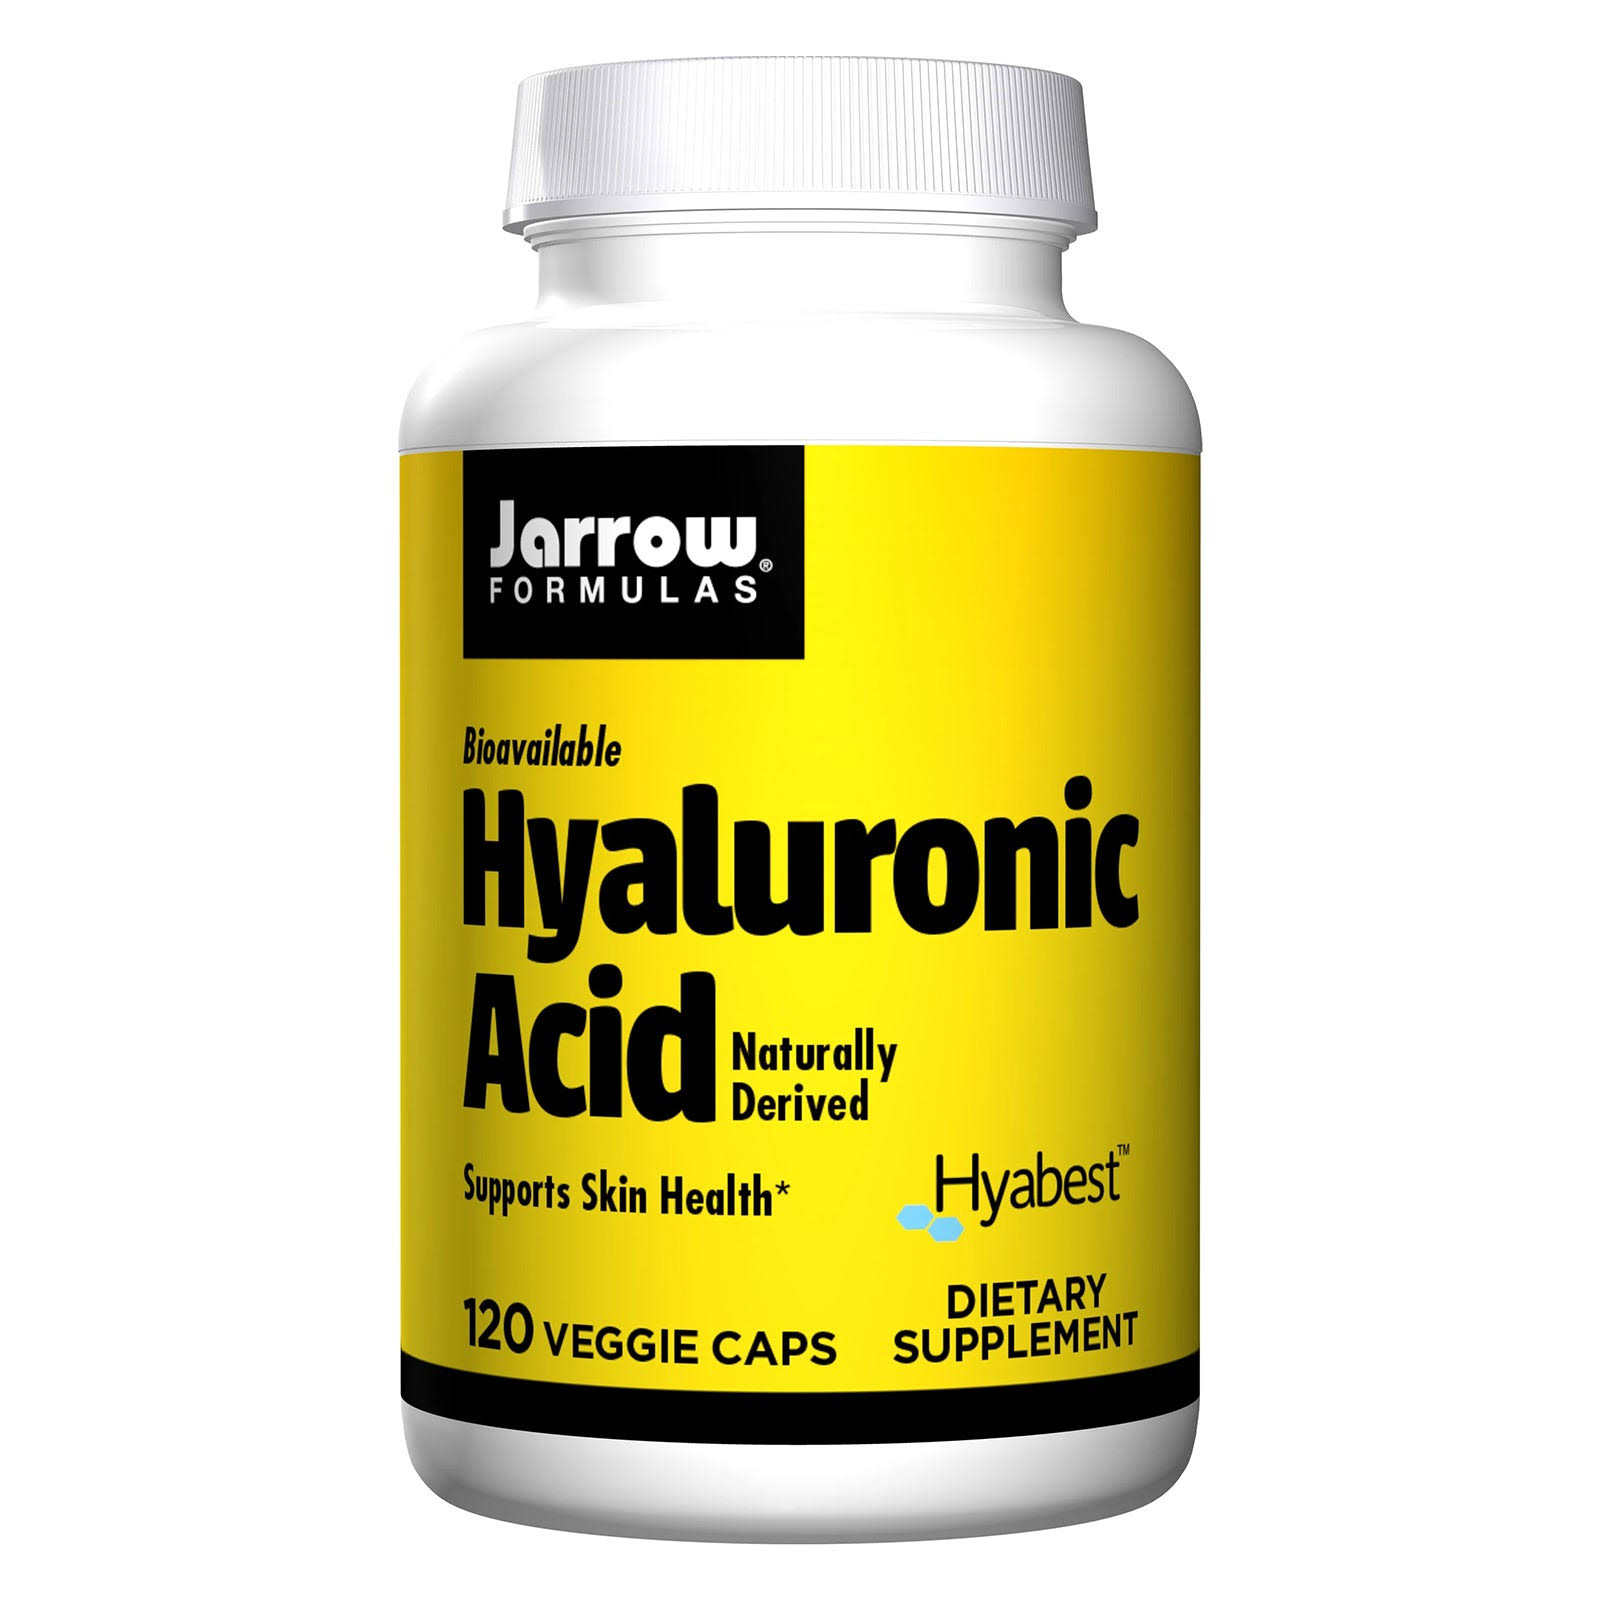 Jarrow Formulas Hyaluronic Acid - 120 Veggie Caps